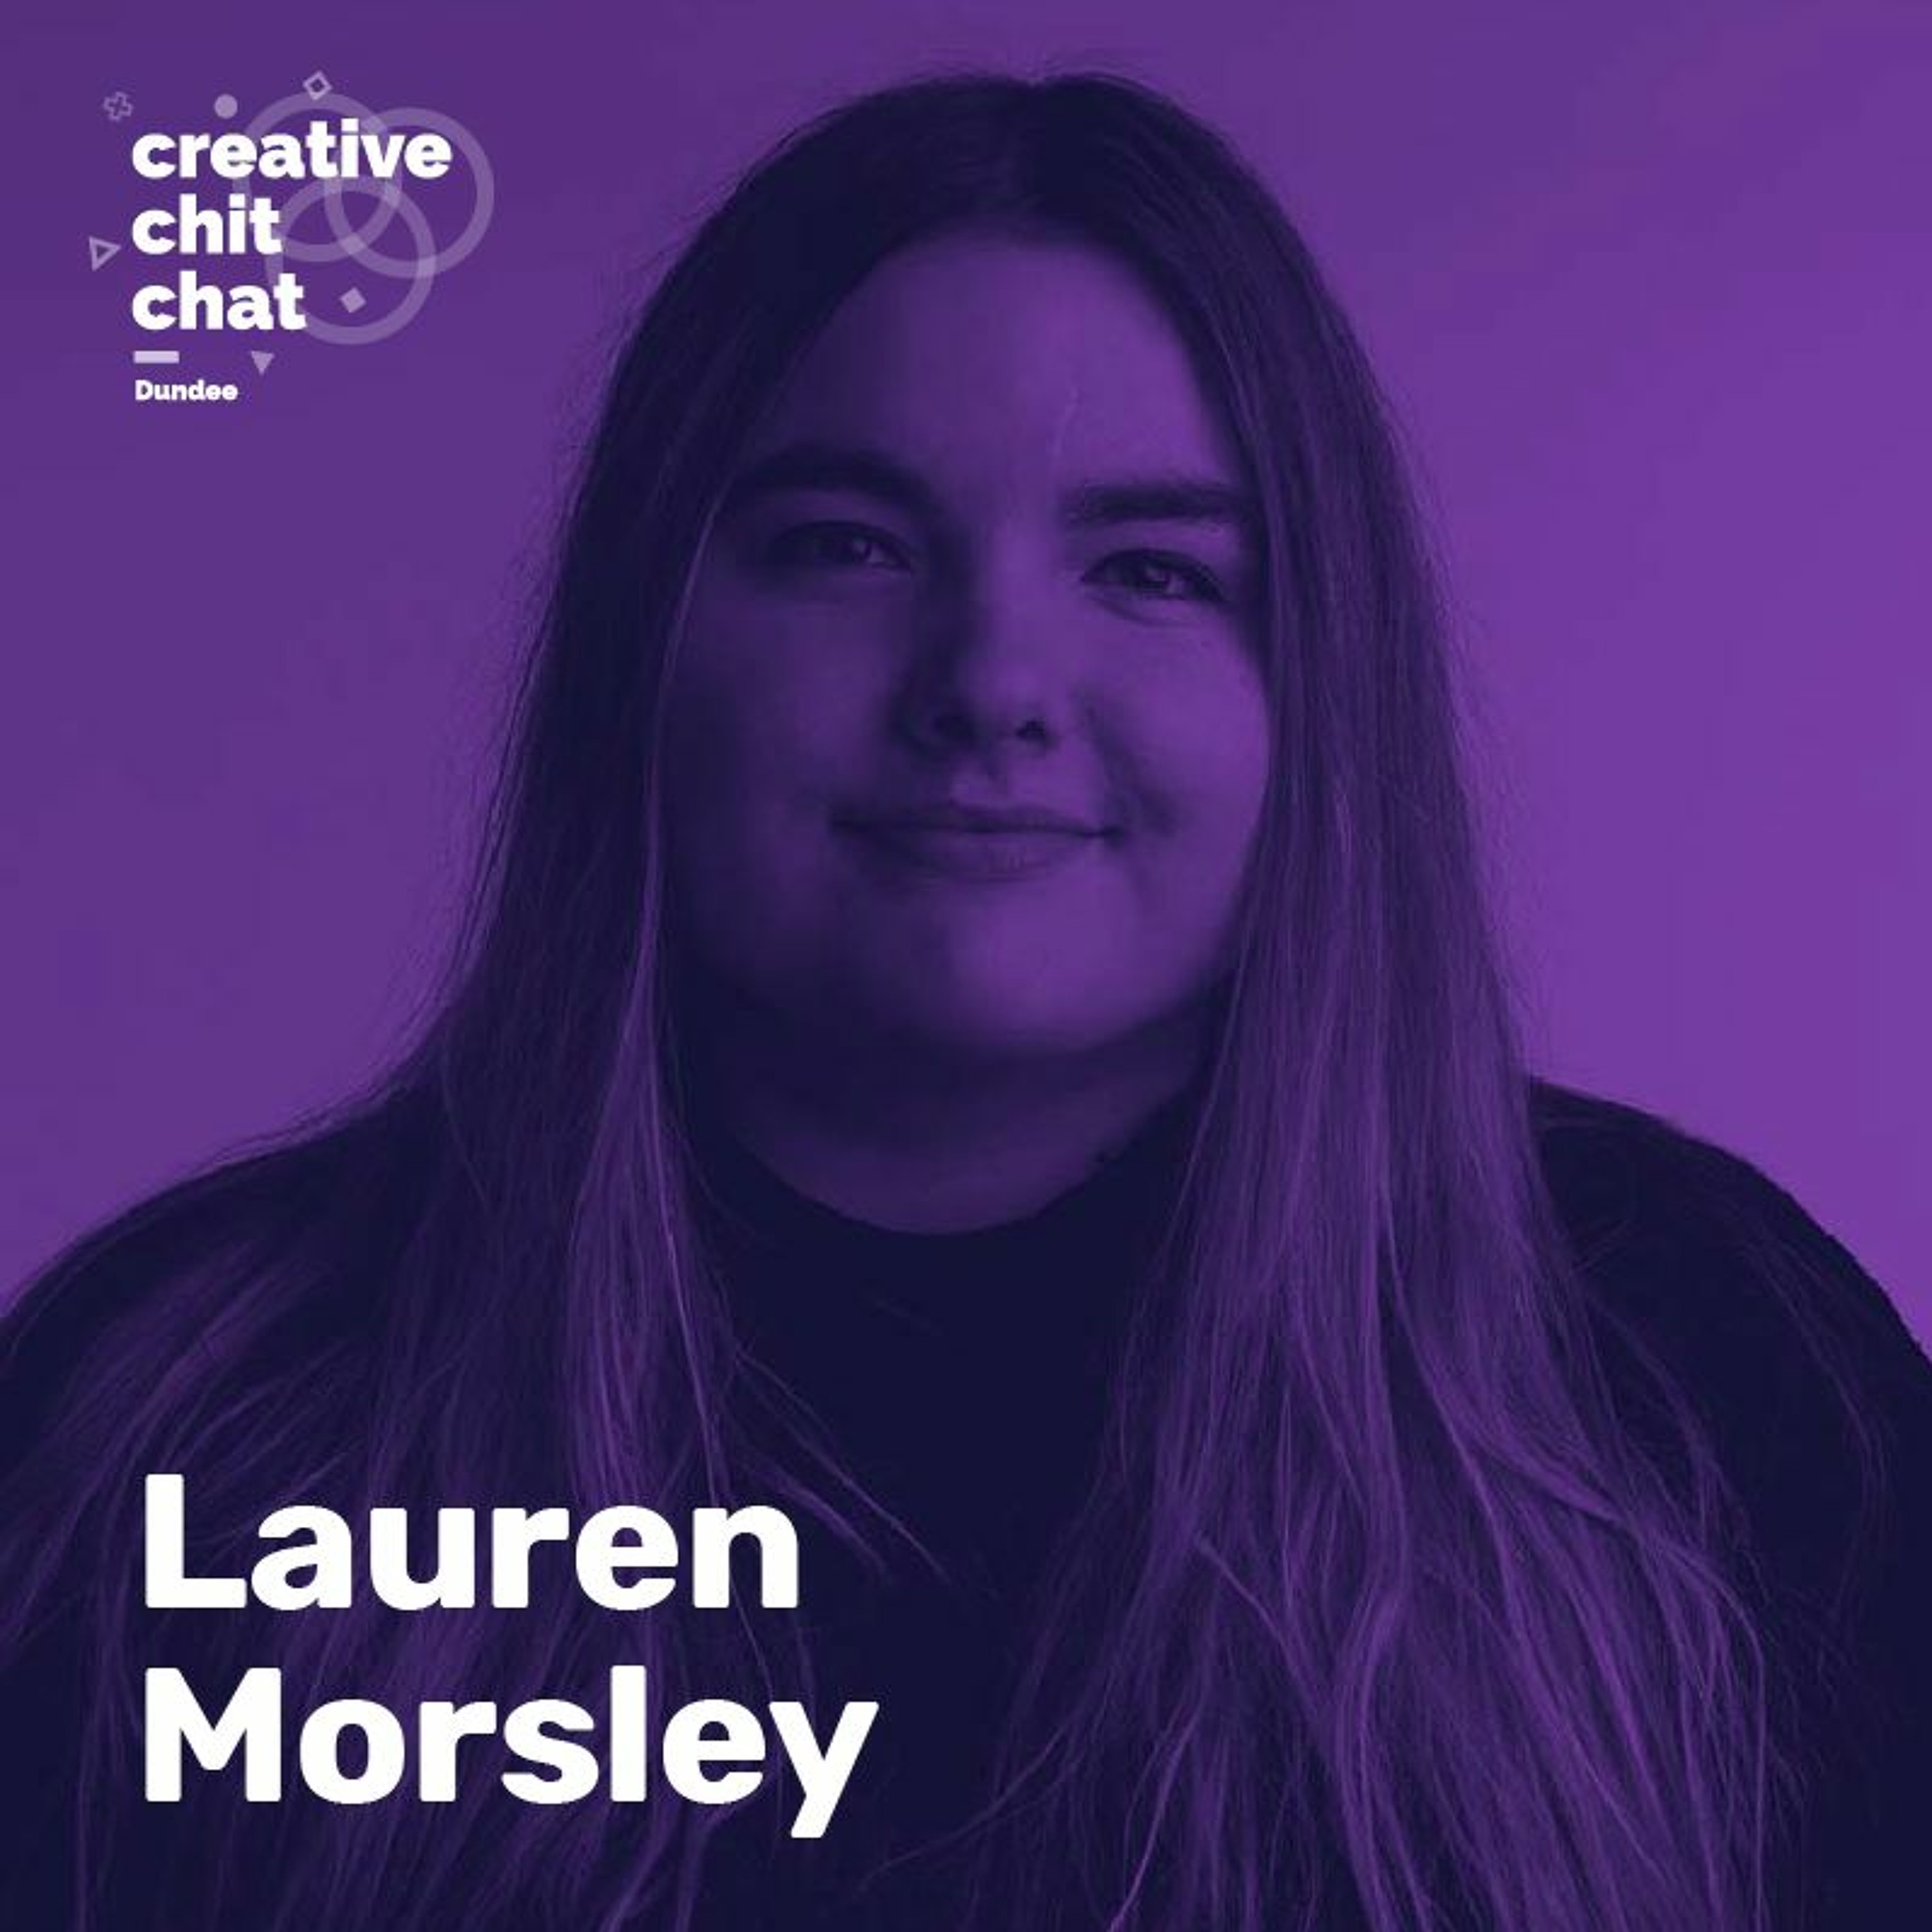 Lauren Morsley - Creative fulfilment as an illustrator and taking things slowly